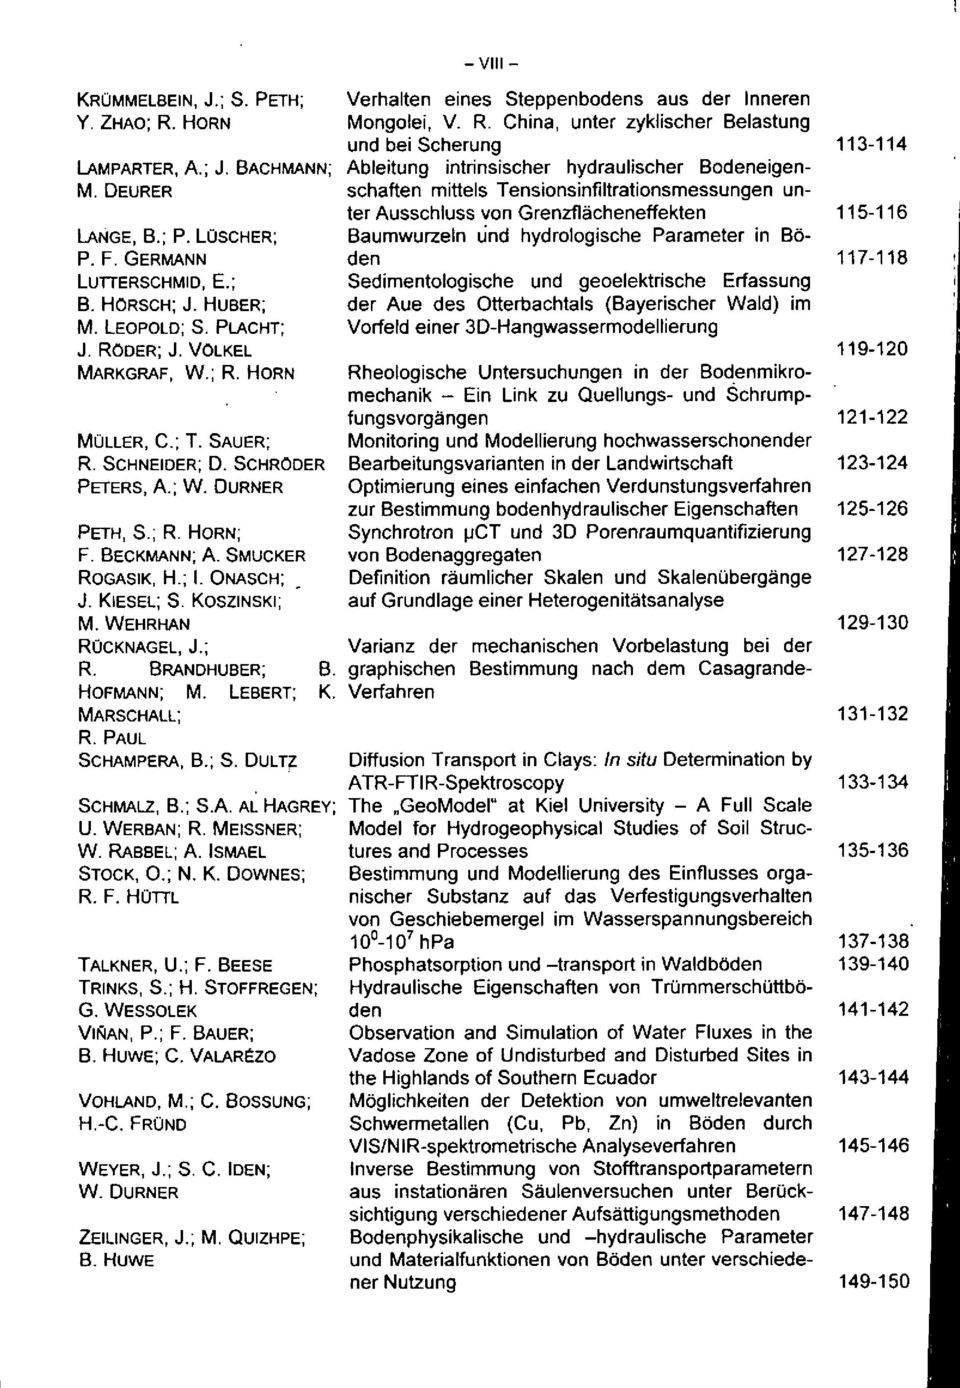 WEHRHAN RüCKNAGEL, J.; R. BRANDHUBER; HOFMANN; M. LEBERT; MARSCHALL; R. PAUL SCHAMPERA, B.; S. OULTZ SCHMALZ, B.; S.A. AL HAGREY; U. WERBAN; R. MEISSNER; W. RABBEL; A. ISMAEL STOCK,.; N. K. OOWNES; R.